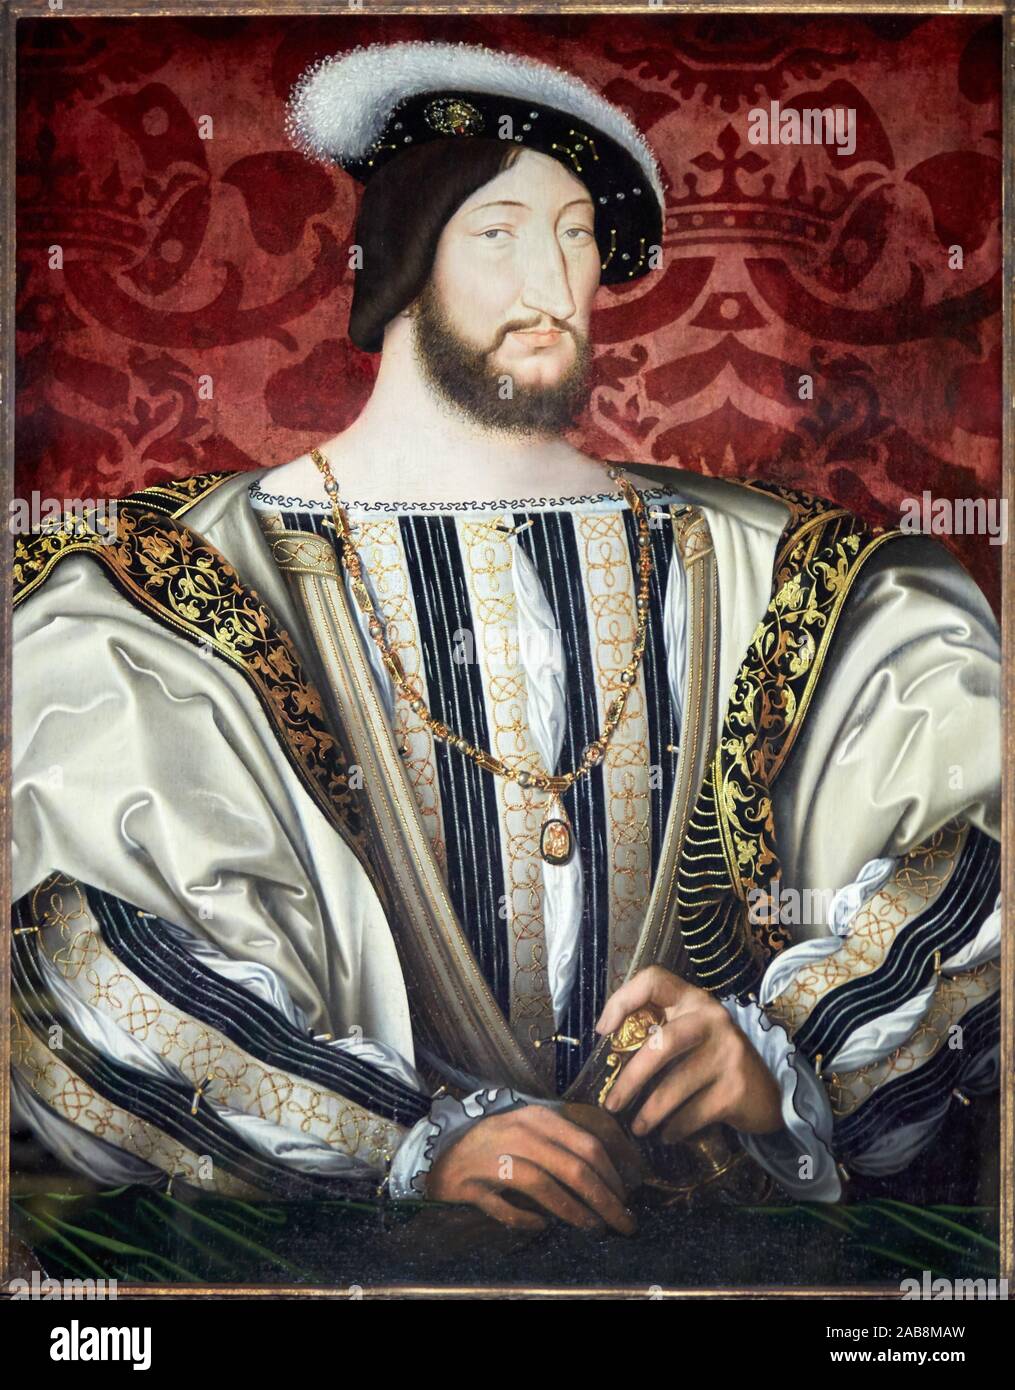 Portrait of Francis I, King of France